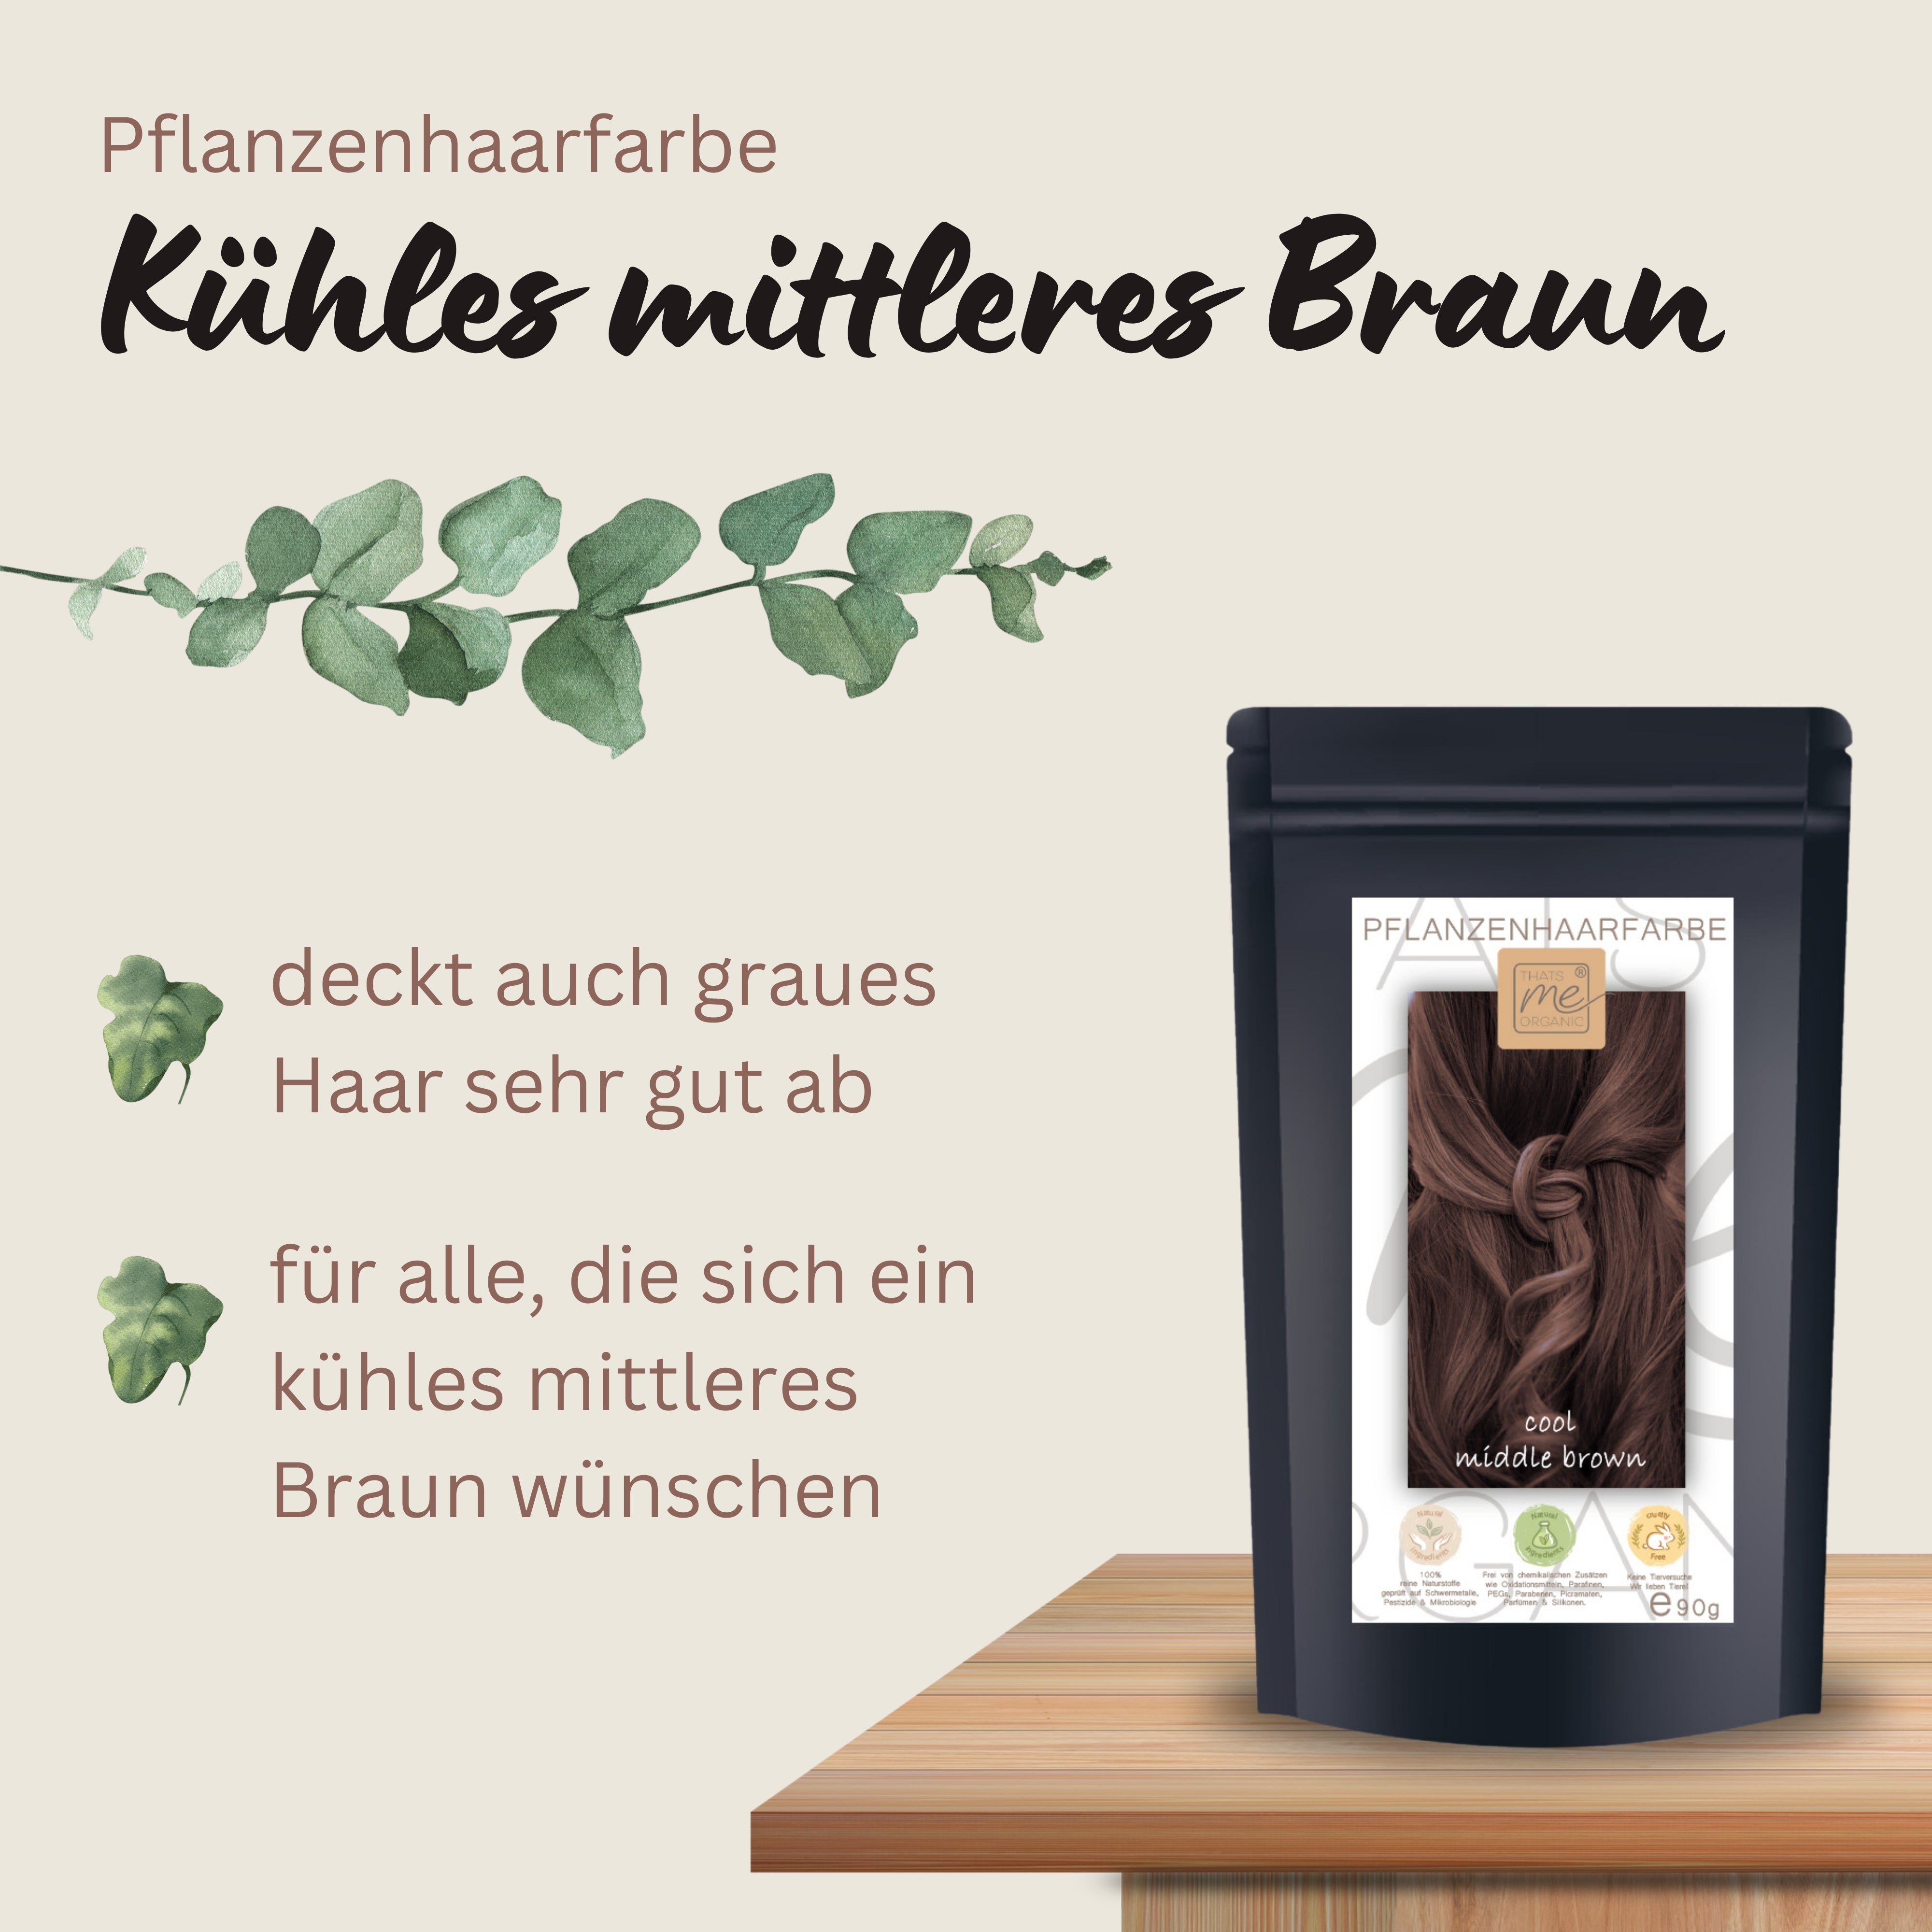 Profi-Pflanzenhaarfarbe SET "kühles mittleres braun - cool middle brown"